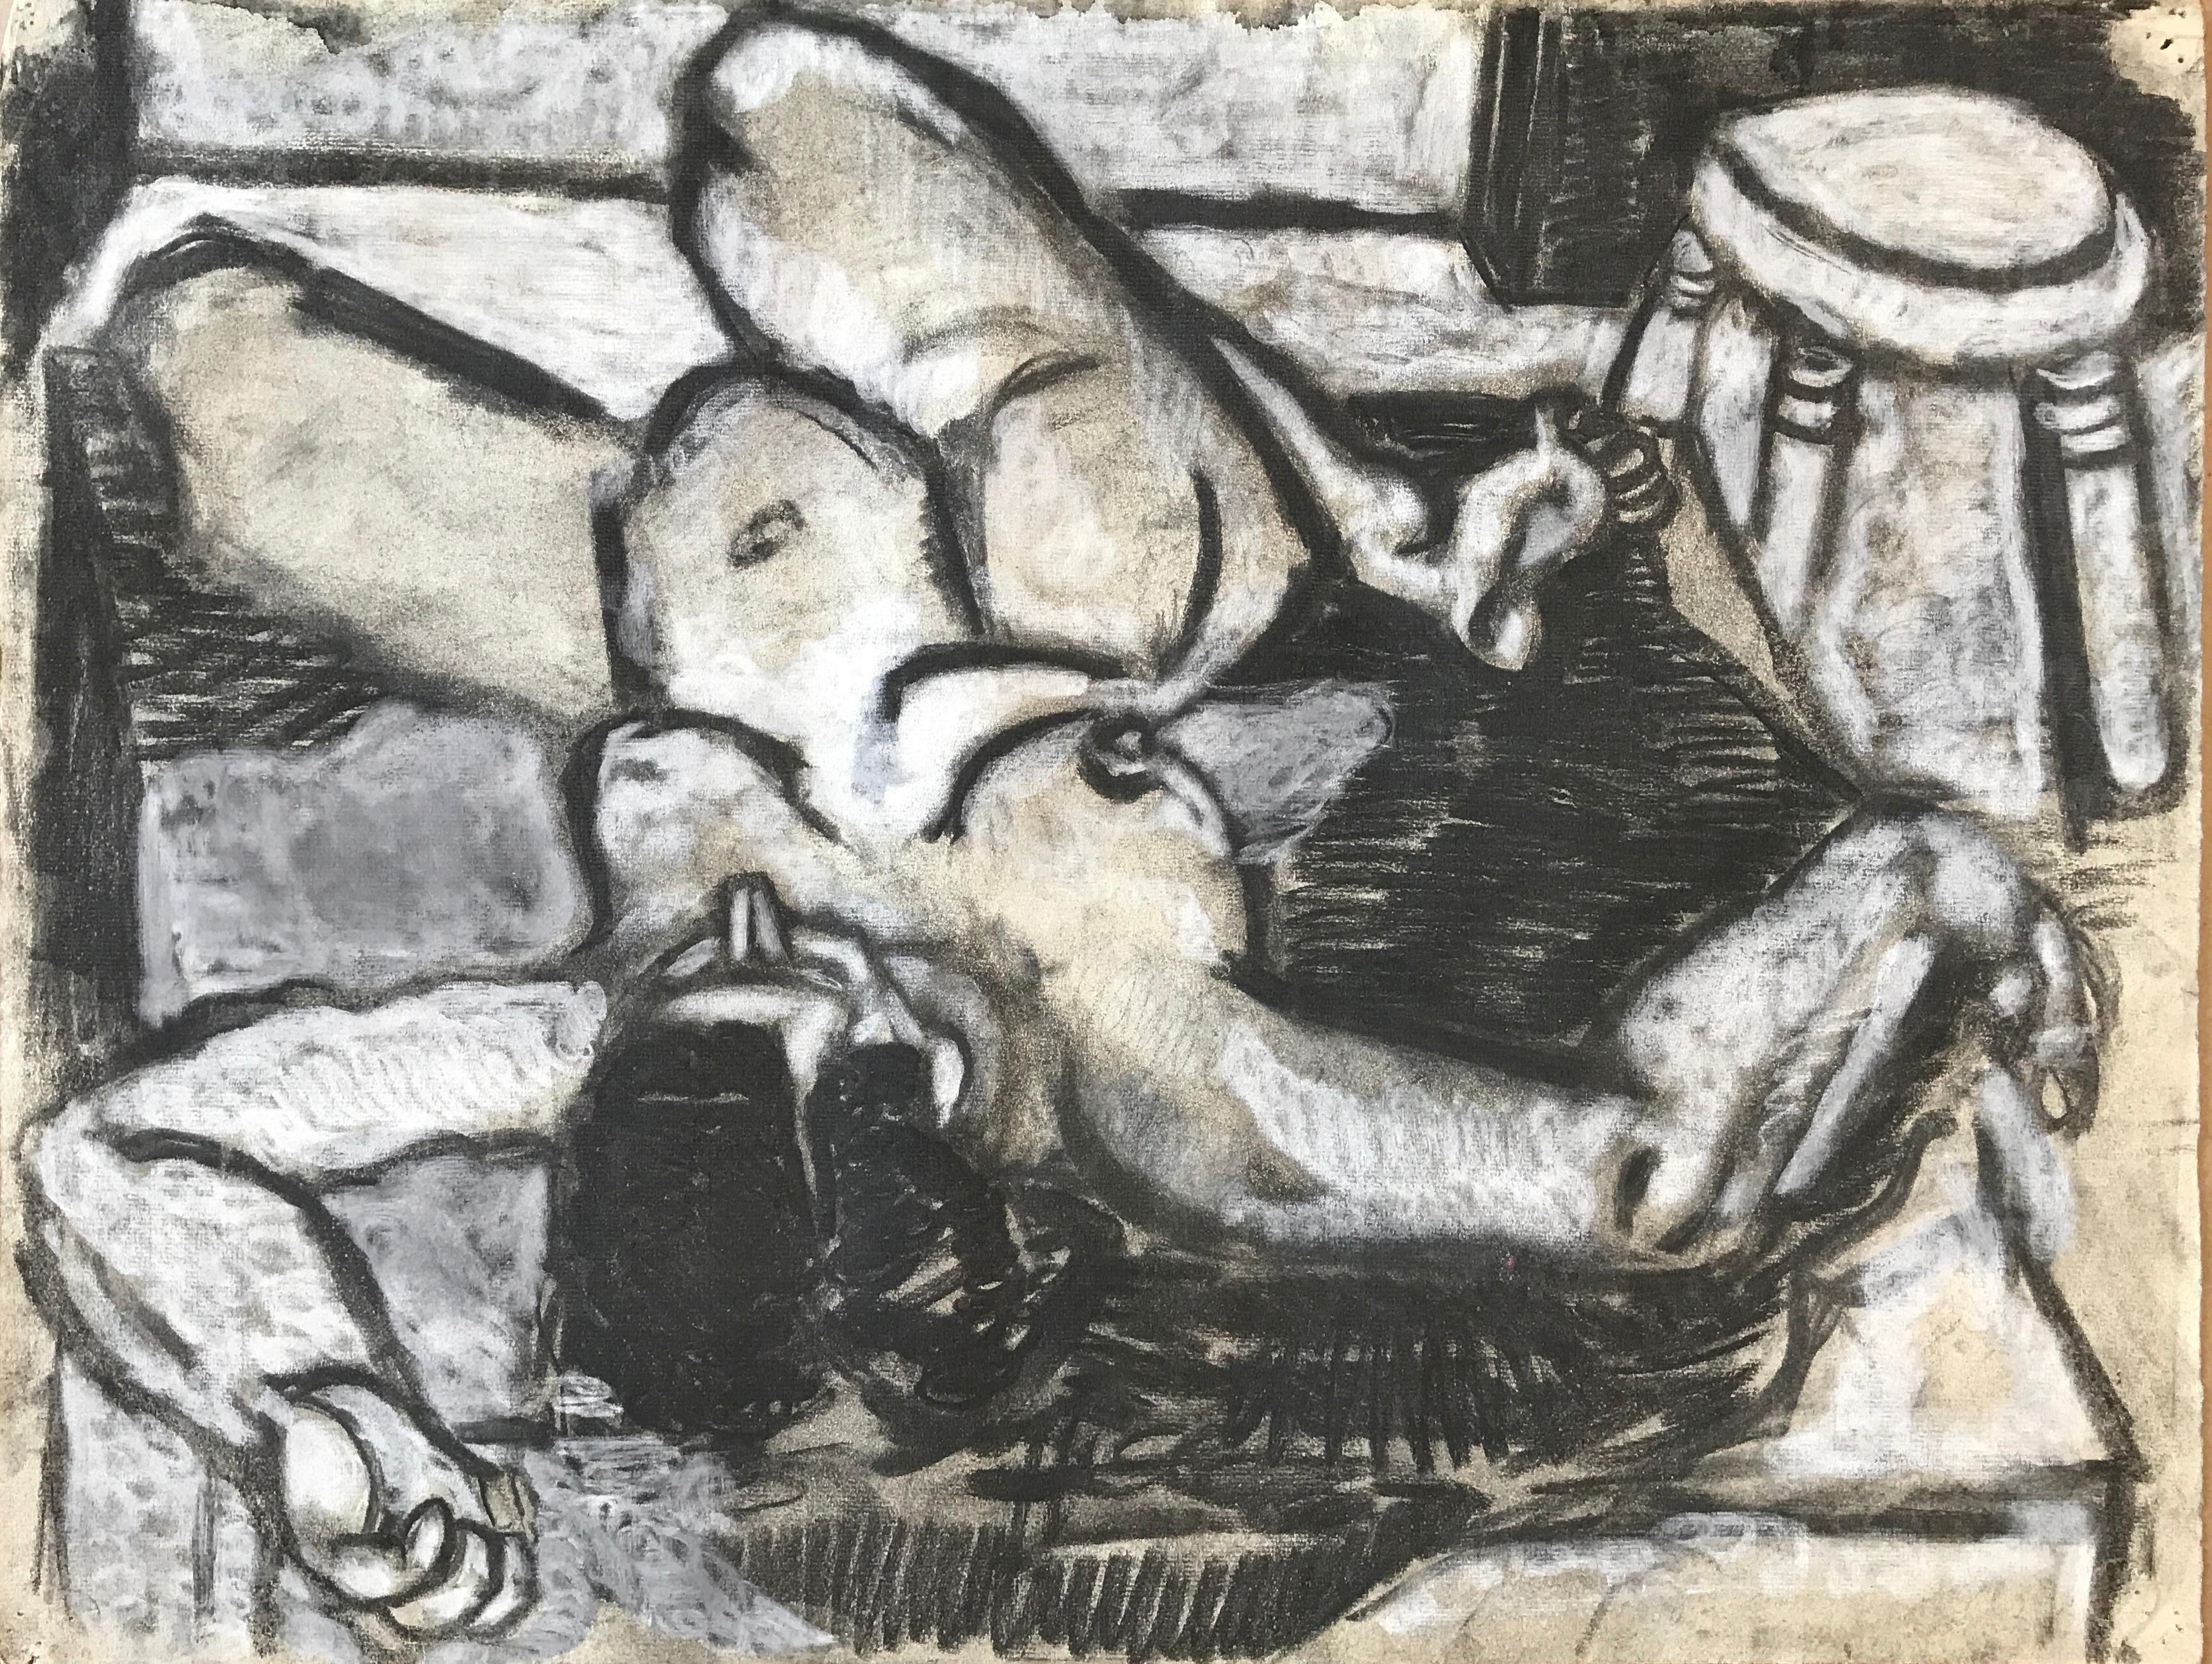 John Henry Bowers Figurative Art - "Draped Hair" 1940s Charcoal Drawing Female Nude Bay Area Artist